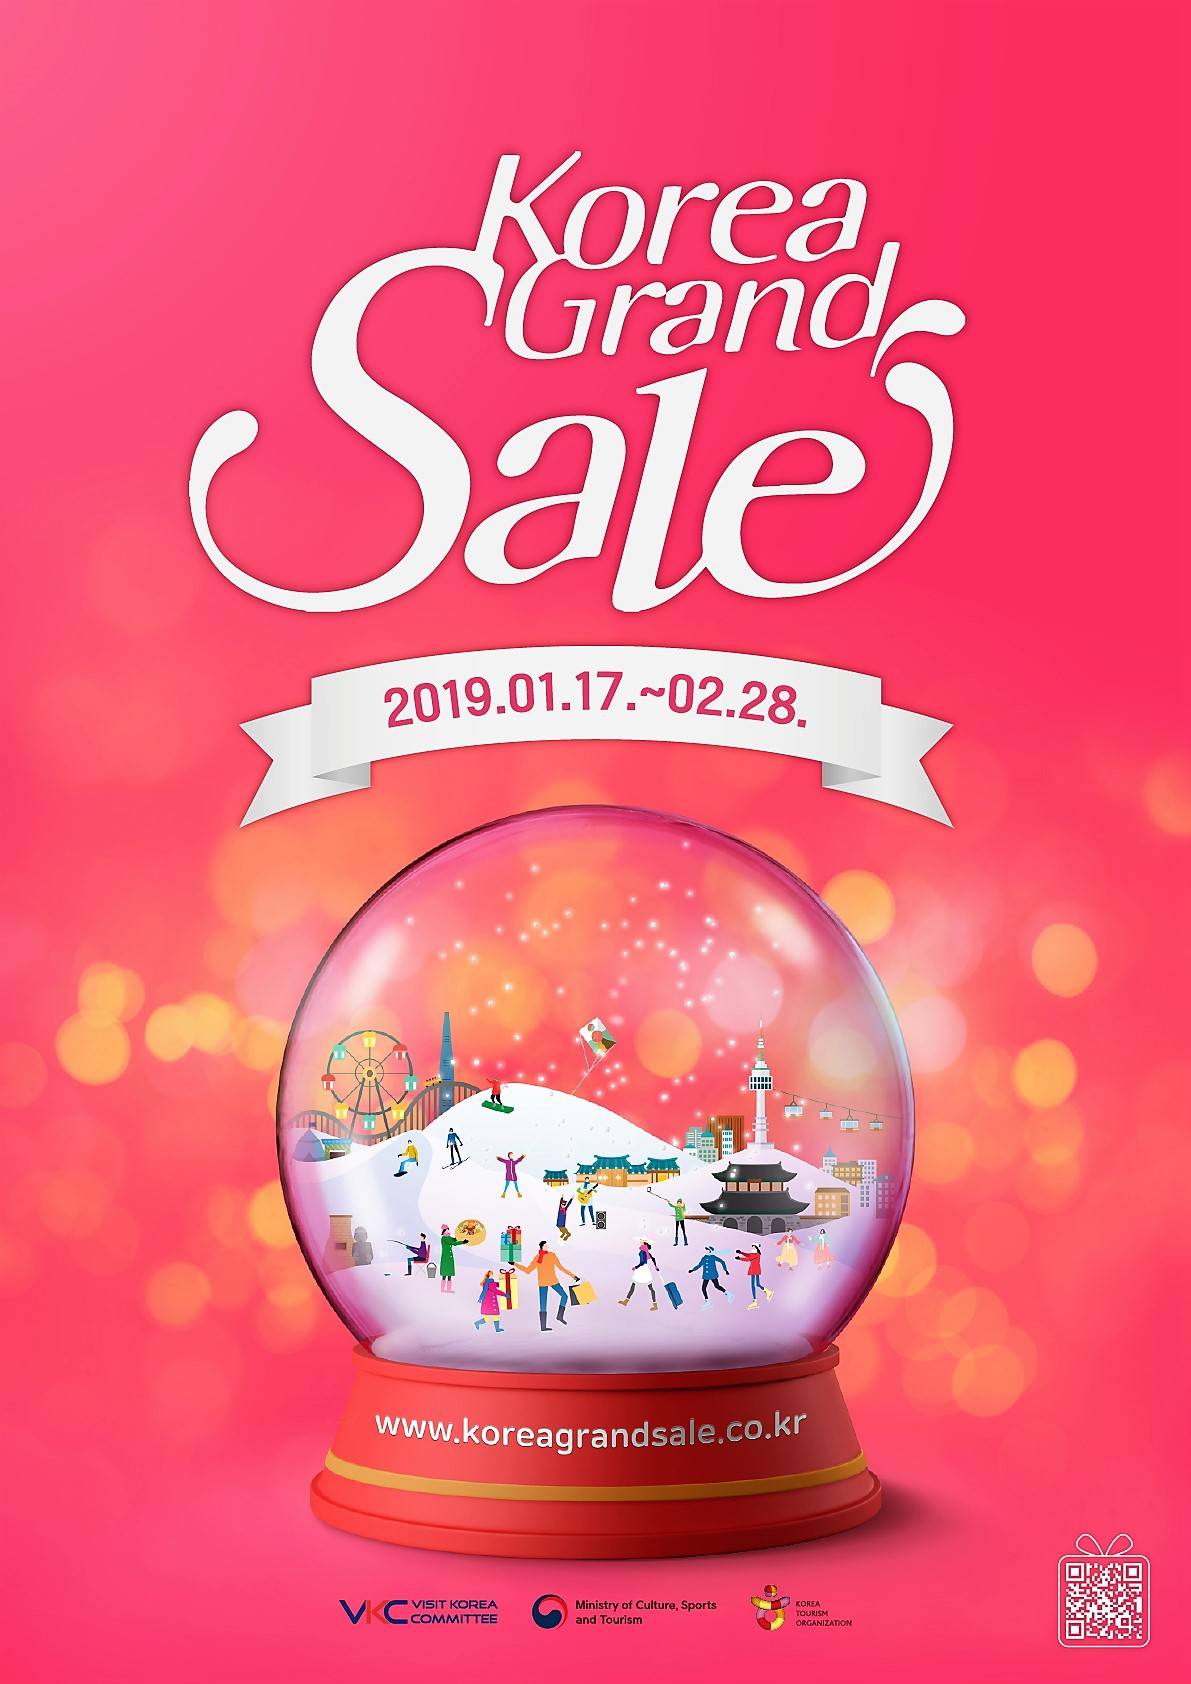 KOREA GRAND SALE TO BEGIN ON JANUARY 17, 2019